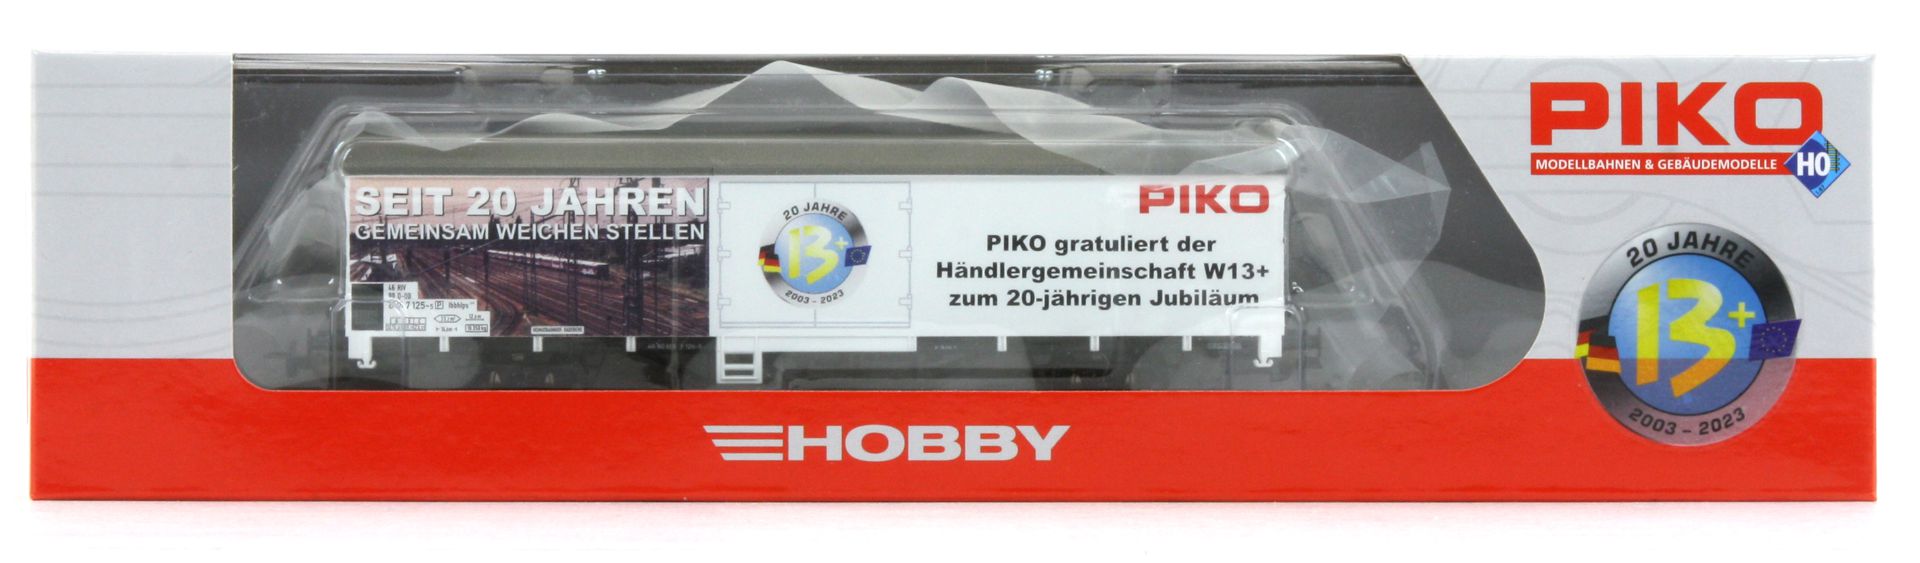 Piko 72230 - Gedeckter Güterwagen 'Piko gratuliert der w13+ zum 20-jährigen Jubiläum'